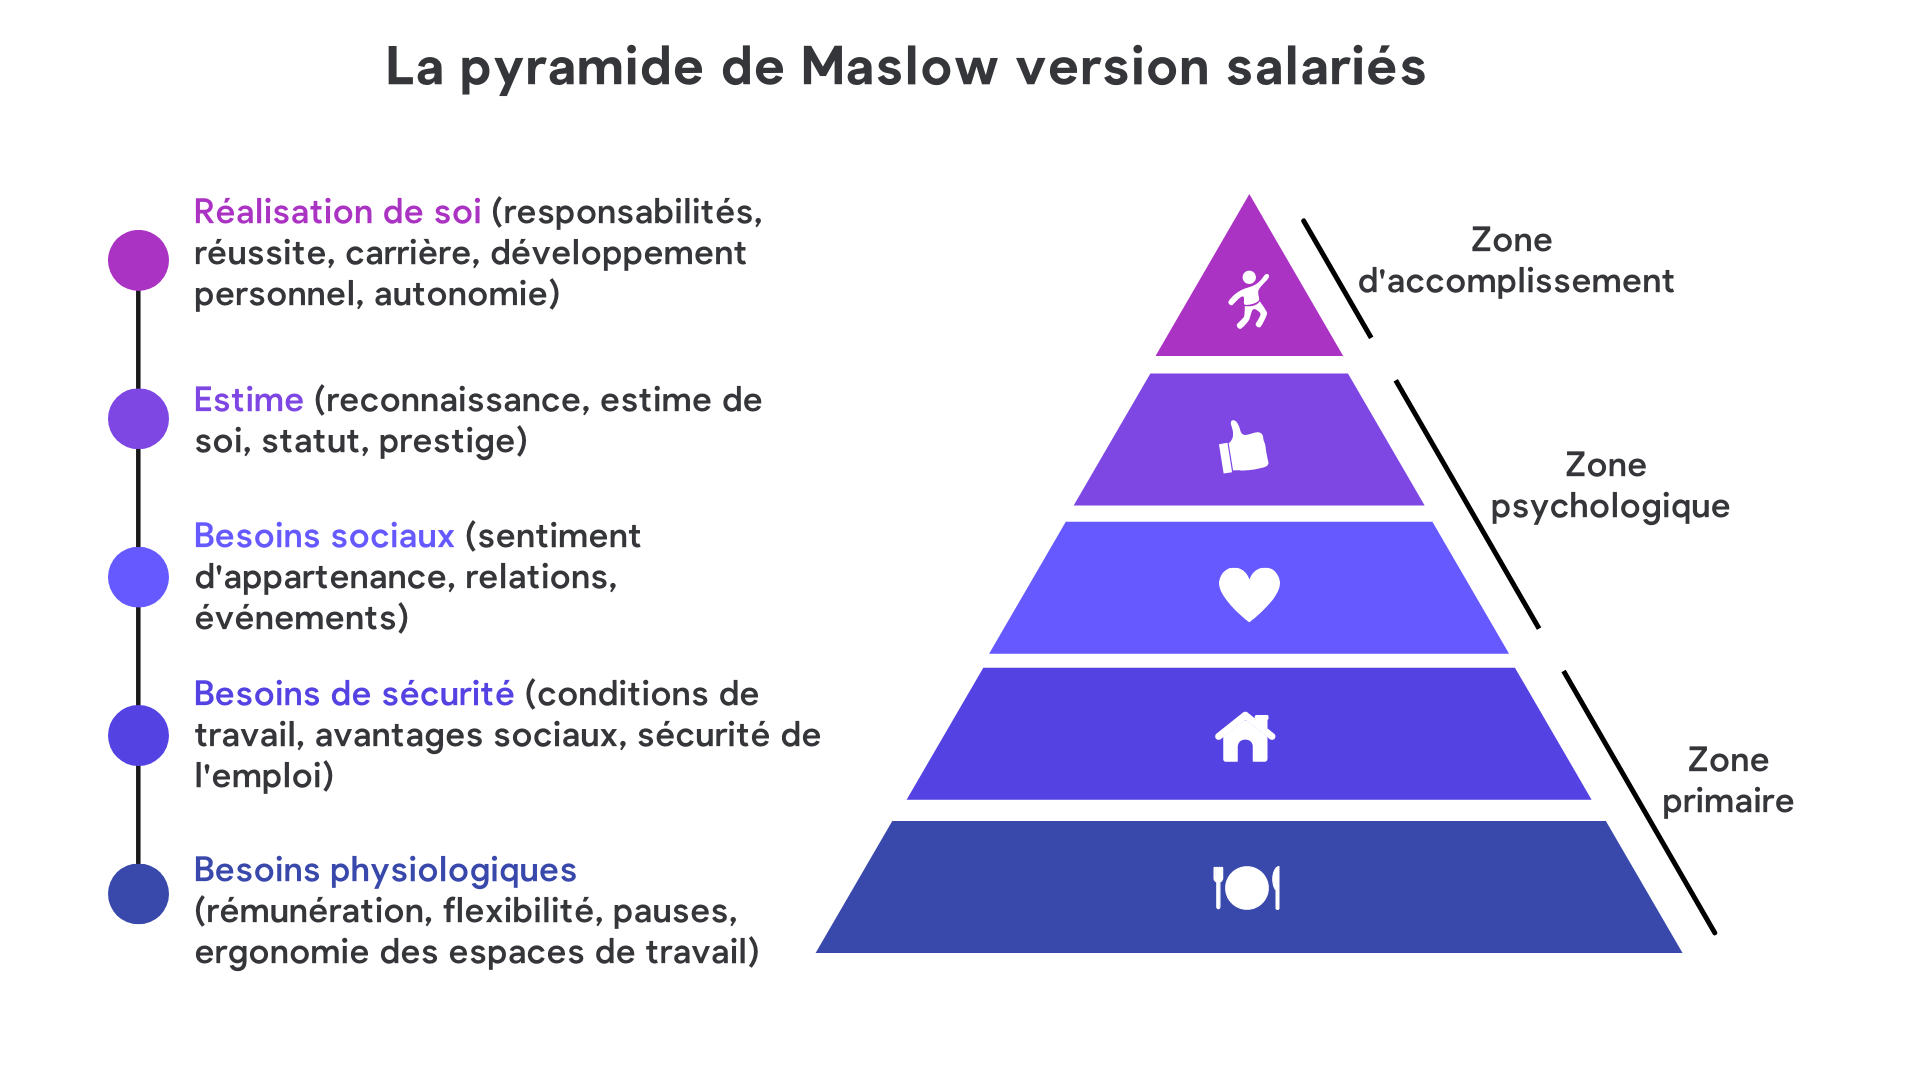 Entreprise : La pyramide de Maslow version salariés